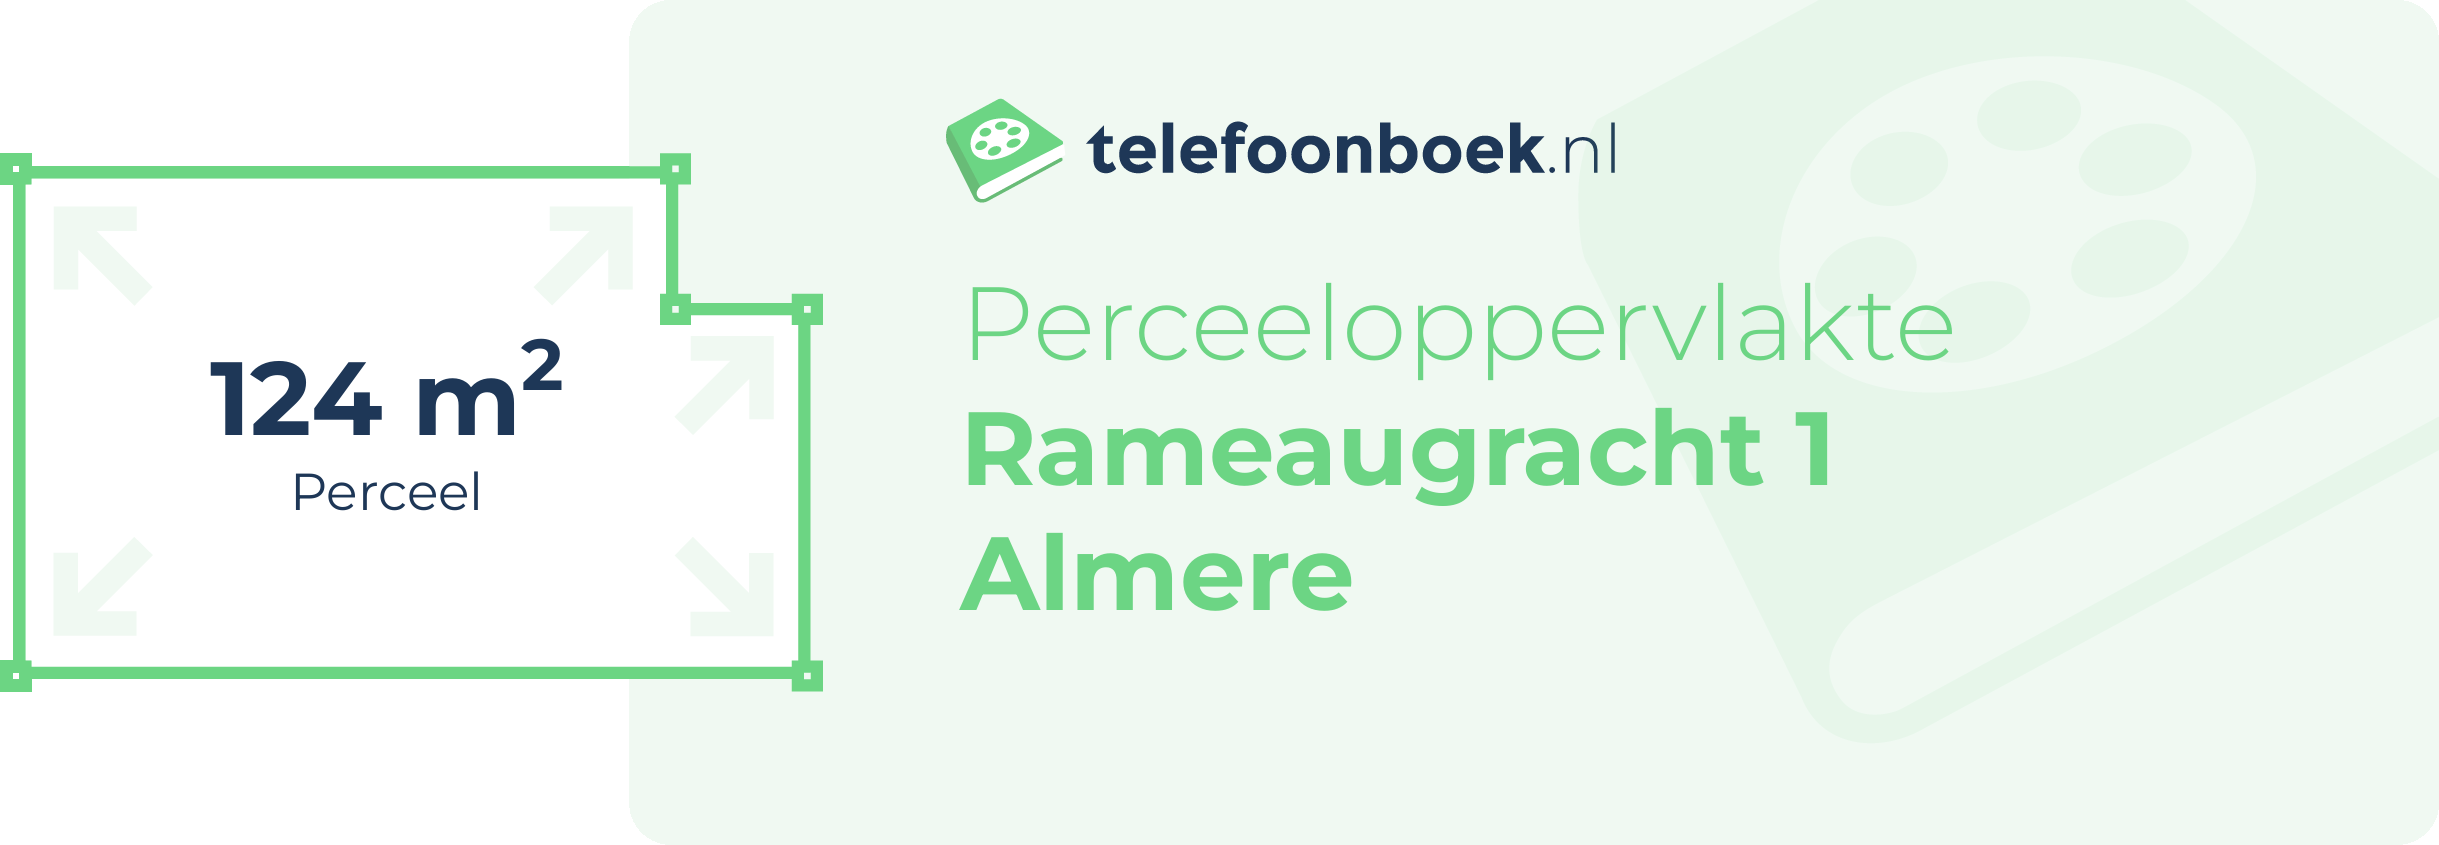 Perceeloppervlakte Rameaugracht 1 Almere